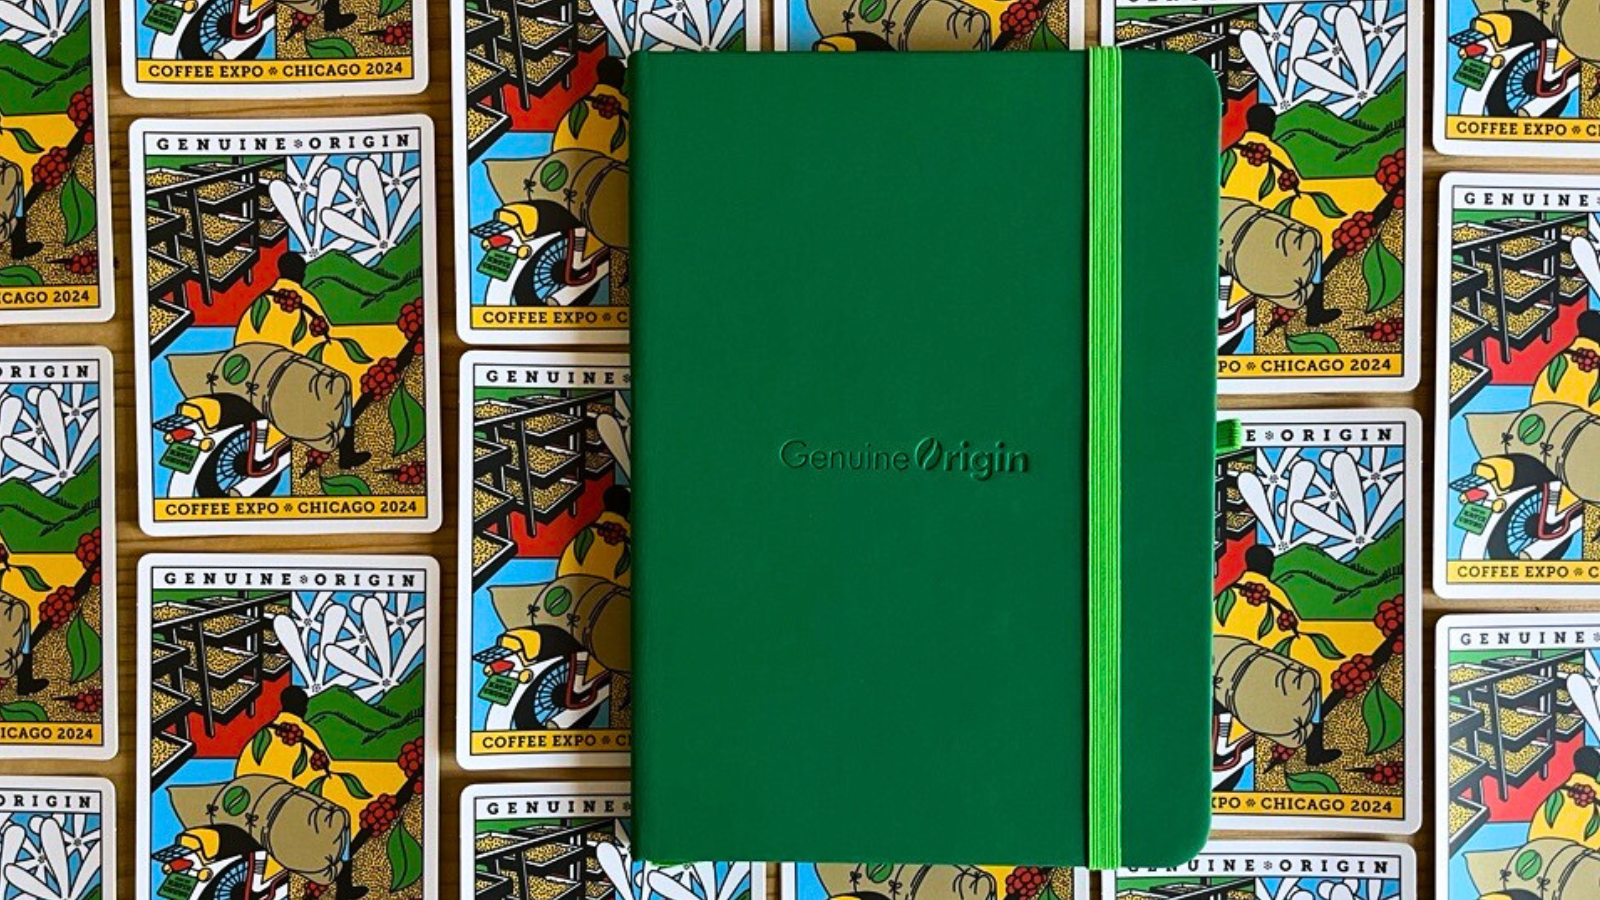 Green Genuine Origin notebooks resting on GO EXPO 2024 stickers